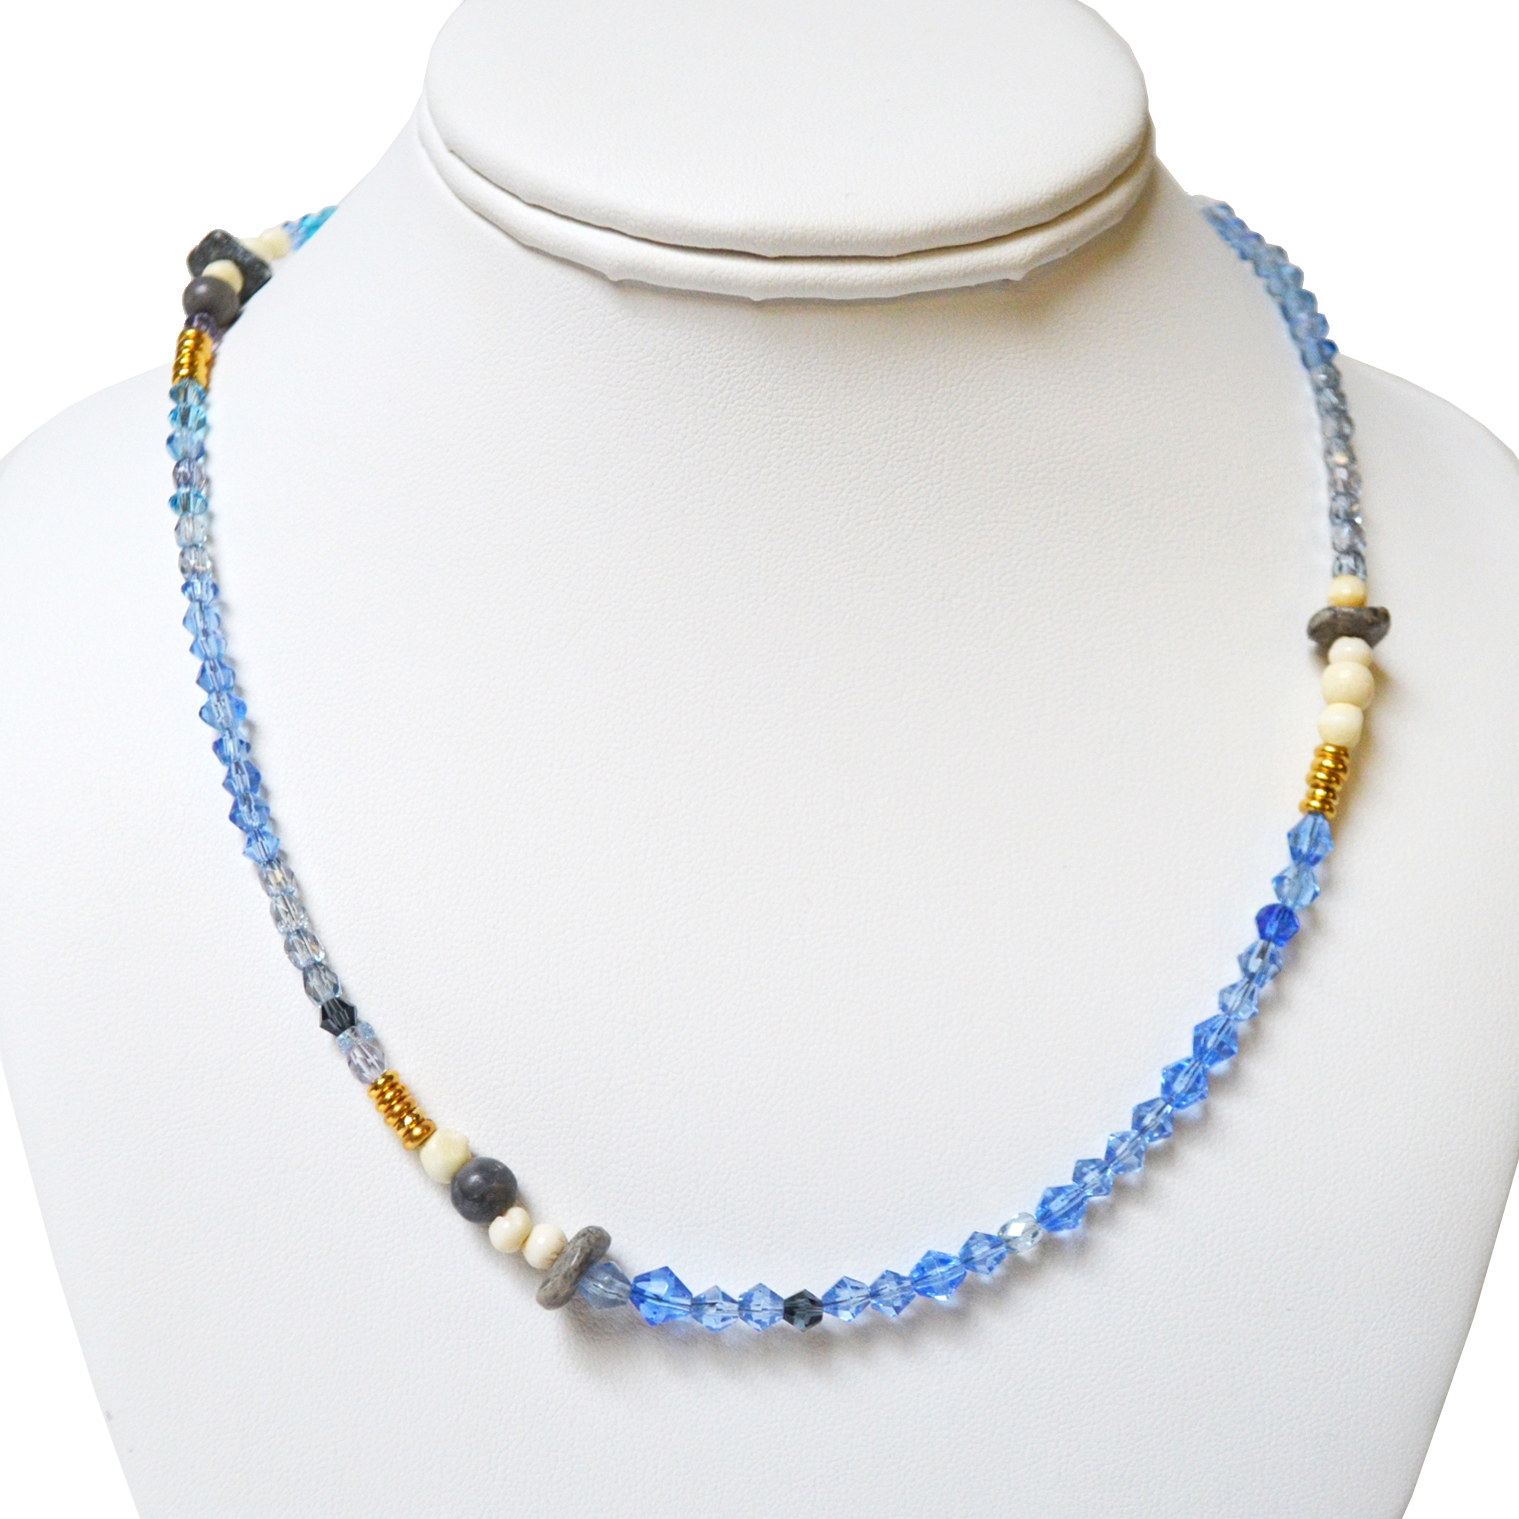 Blue strand necklace by Amy Caliri